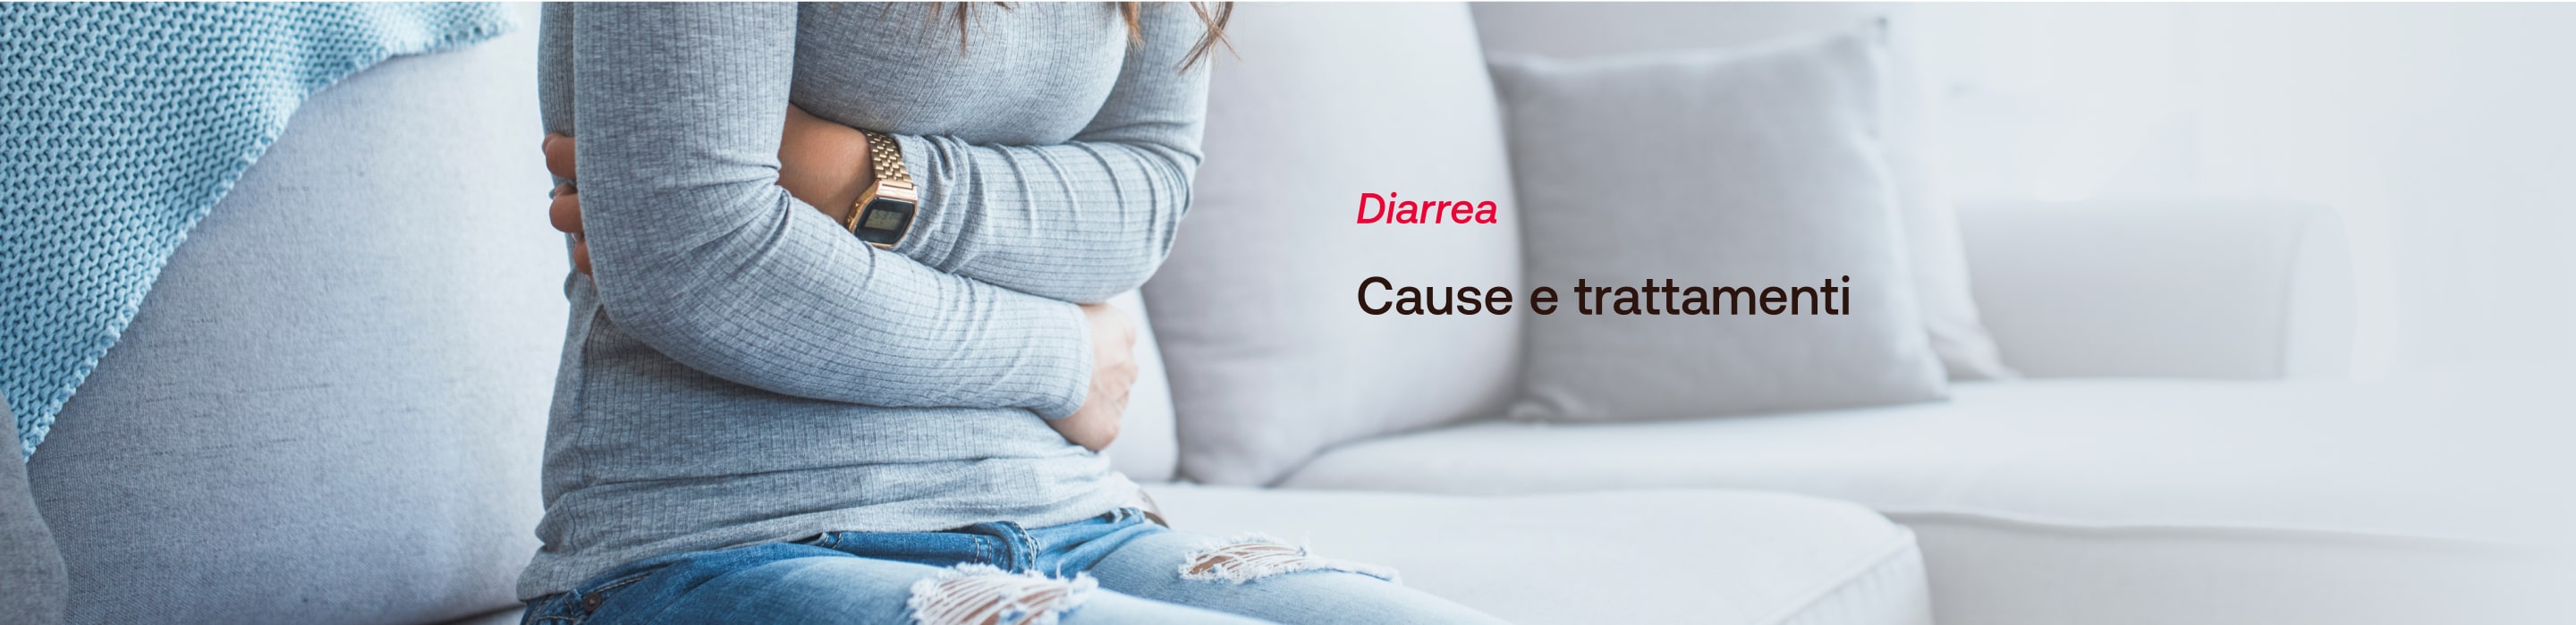 Diarrea - GUIDA